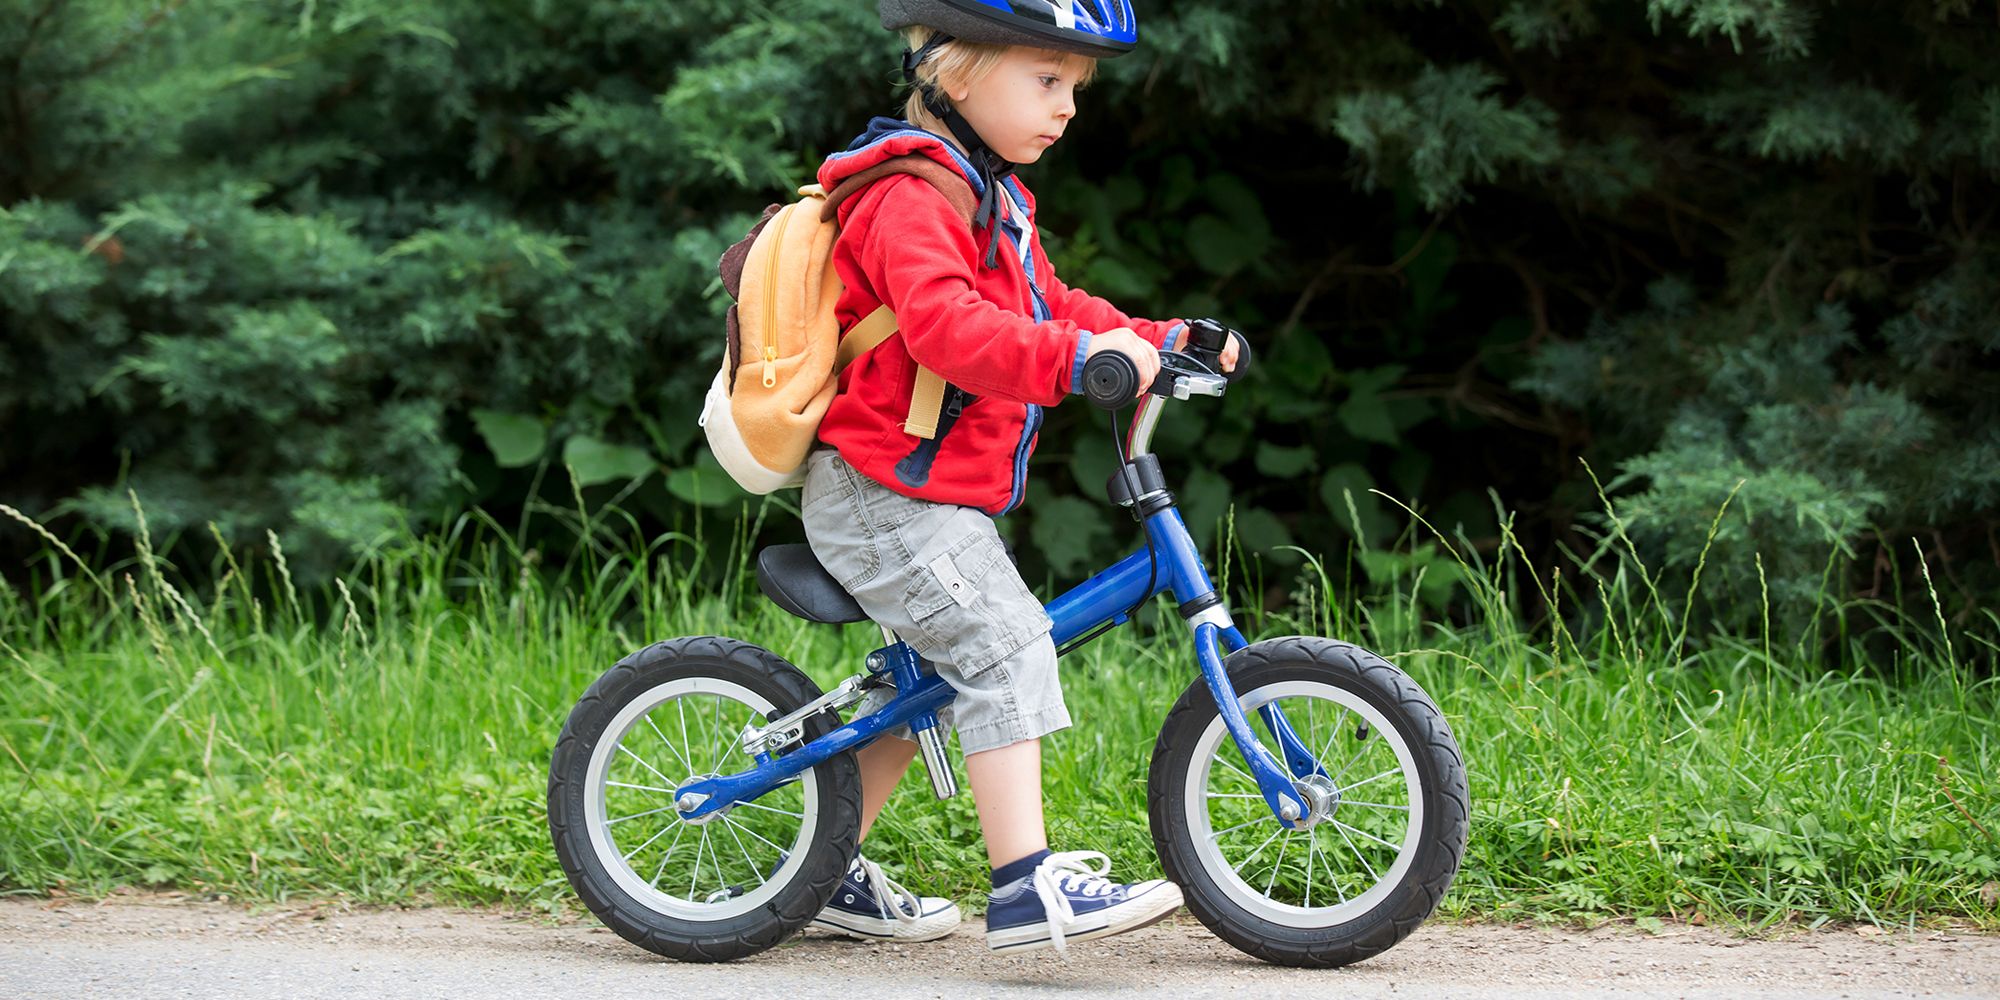 My First Bike Training Cycle for Kids FoxHunter Children’s Balance Bike 